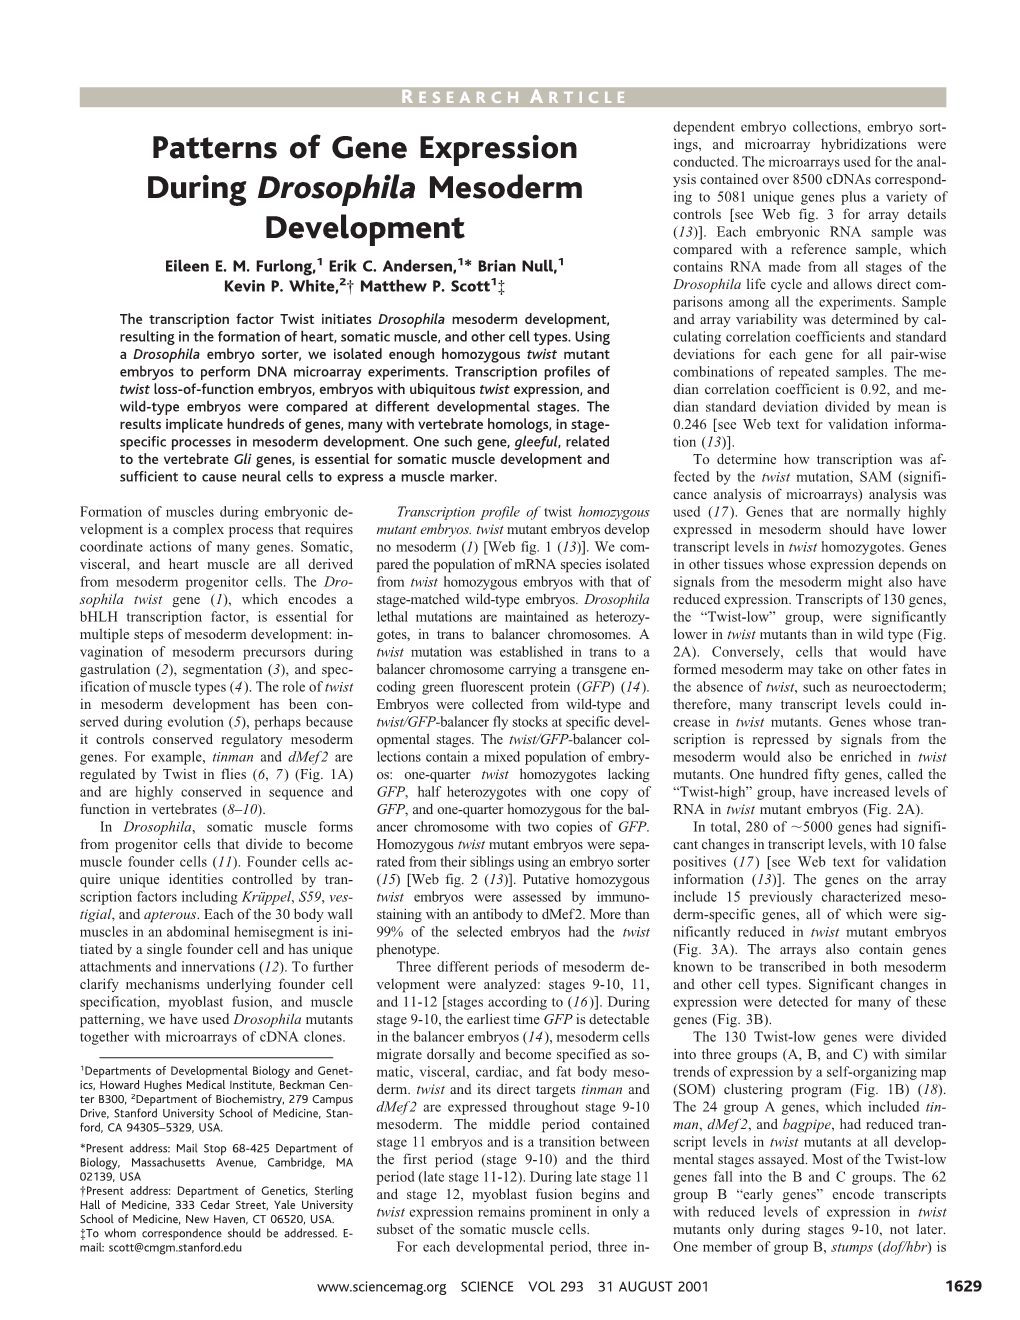 Patterns of Gene Expression During Drosophila Mesoderm Development